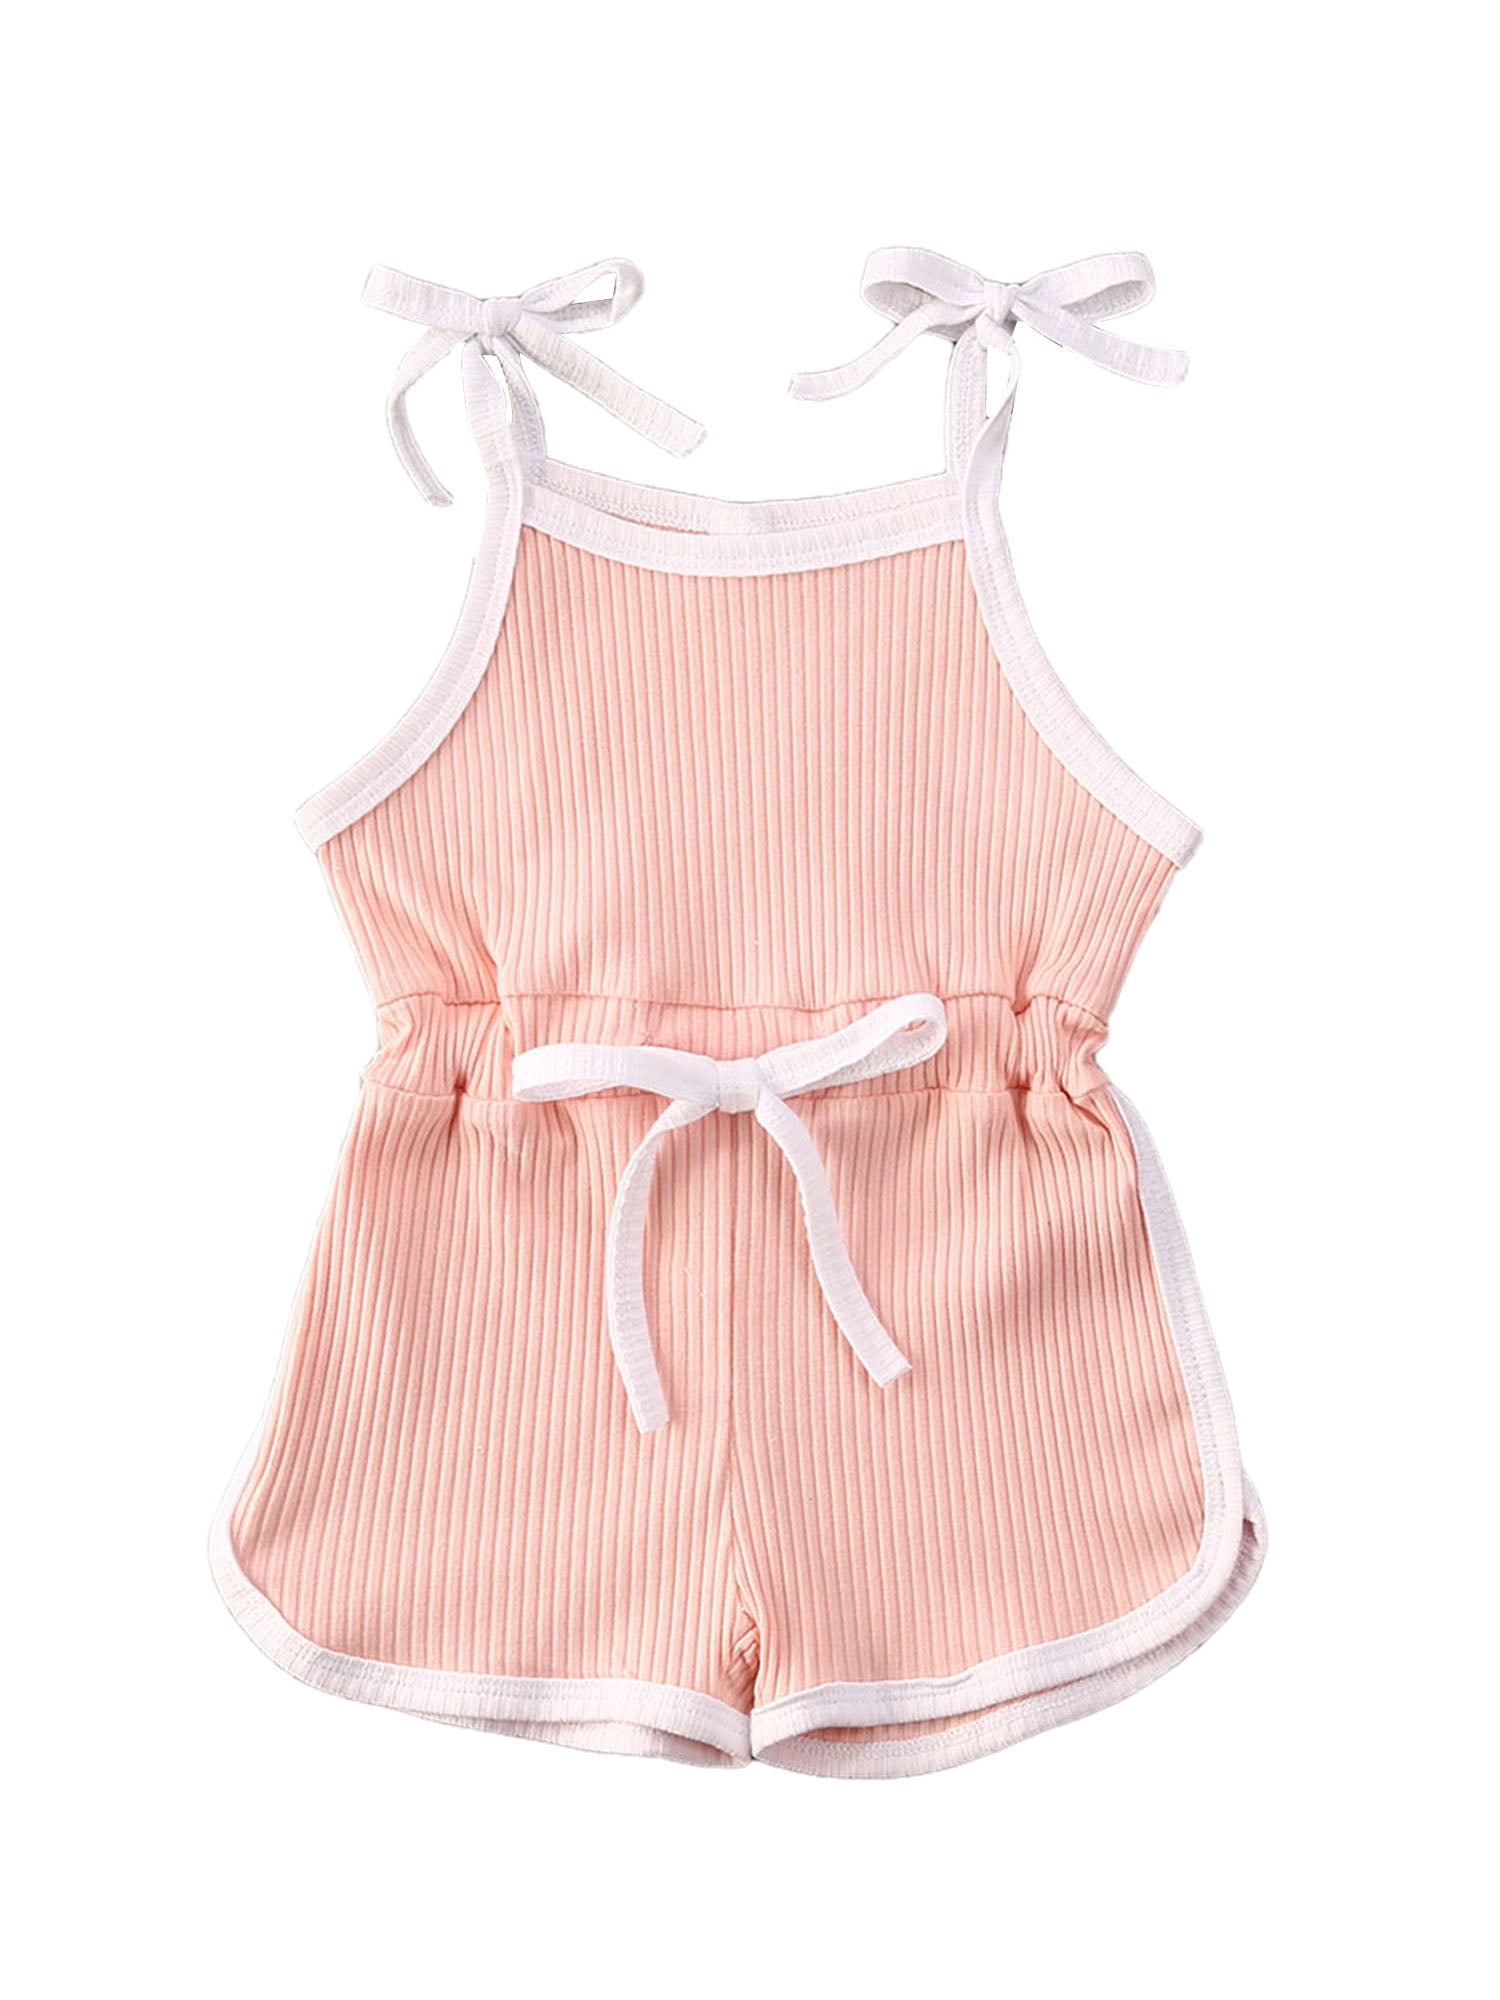 Details about   Newborn Infant Baby Girls Boys Print Romper Jumpsuits Outfits Sunsuit Clothes US 